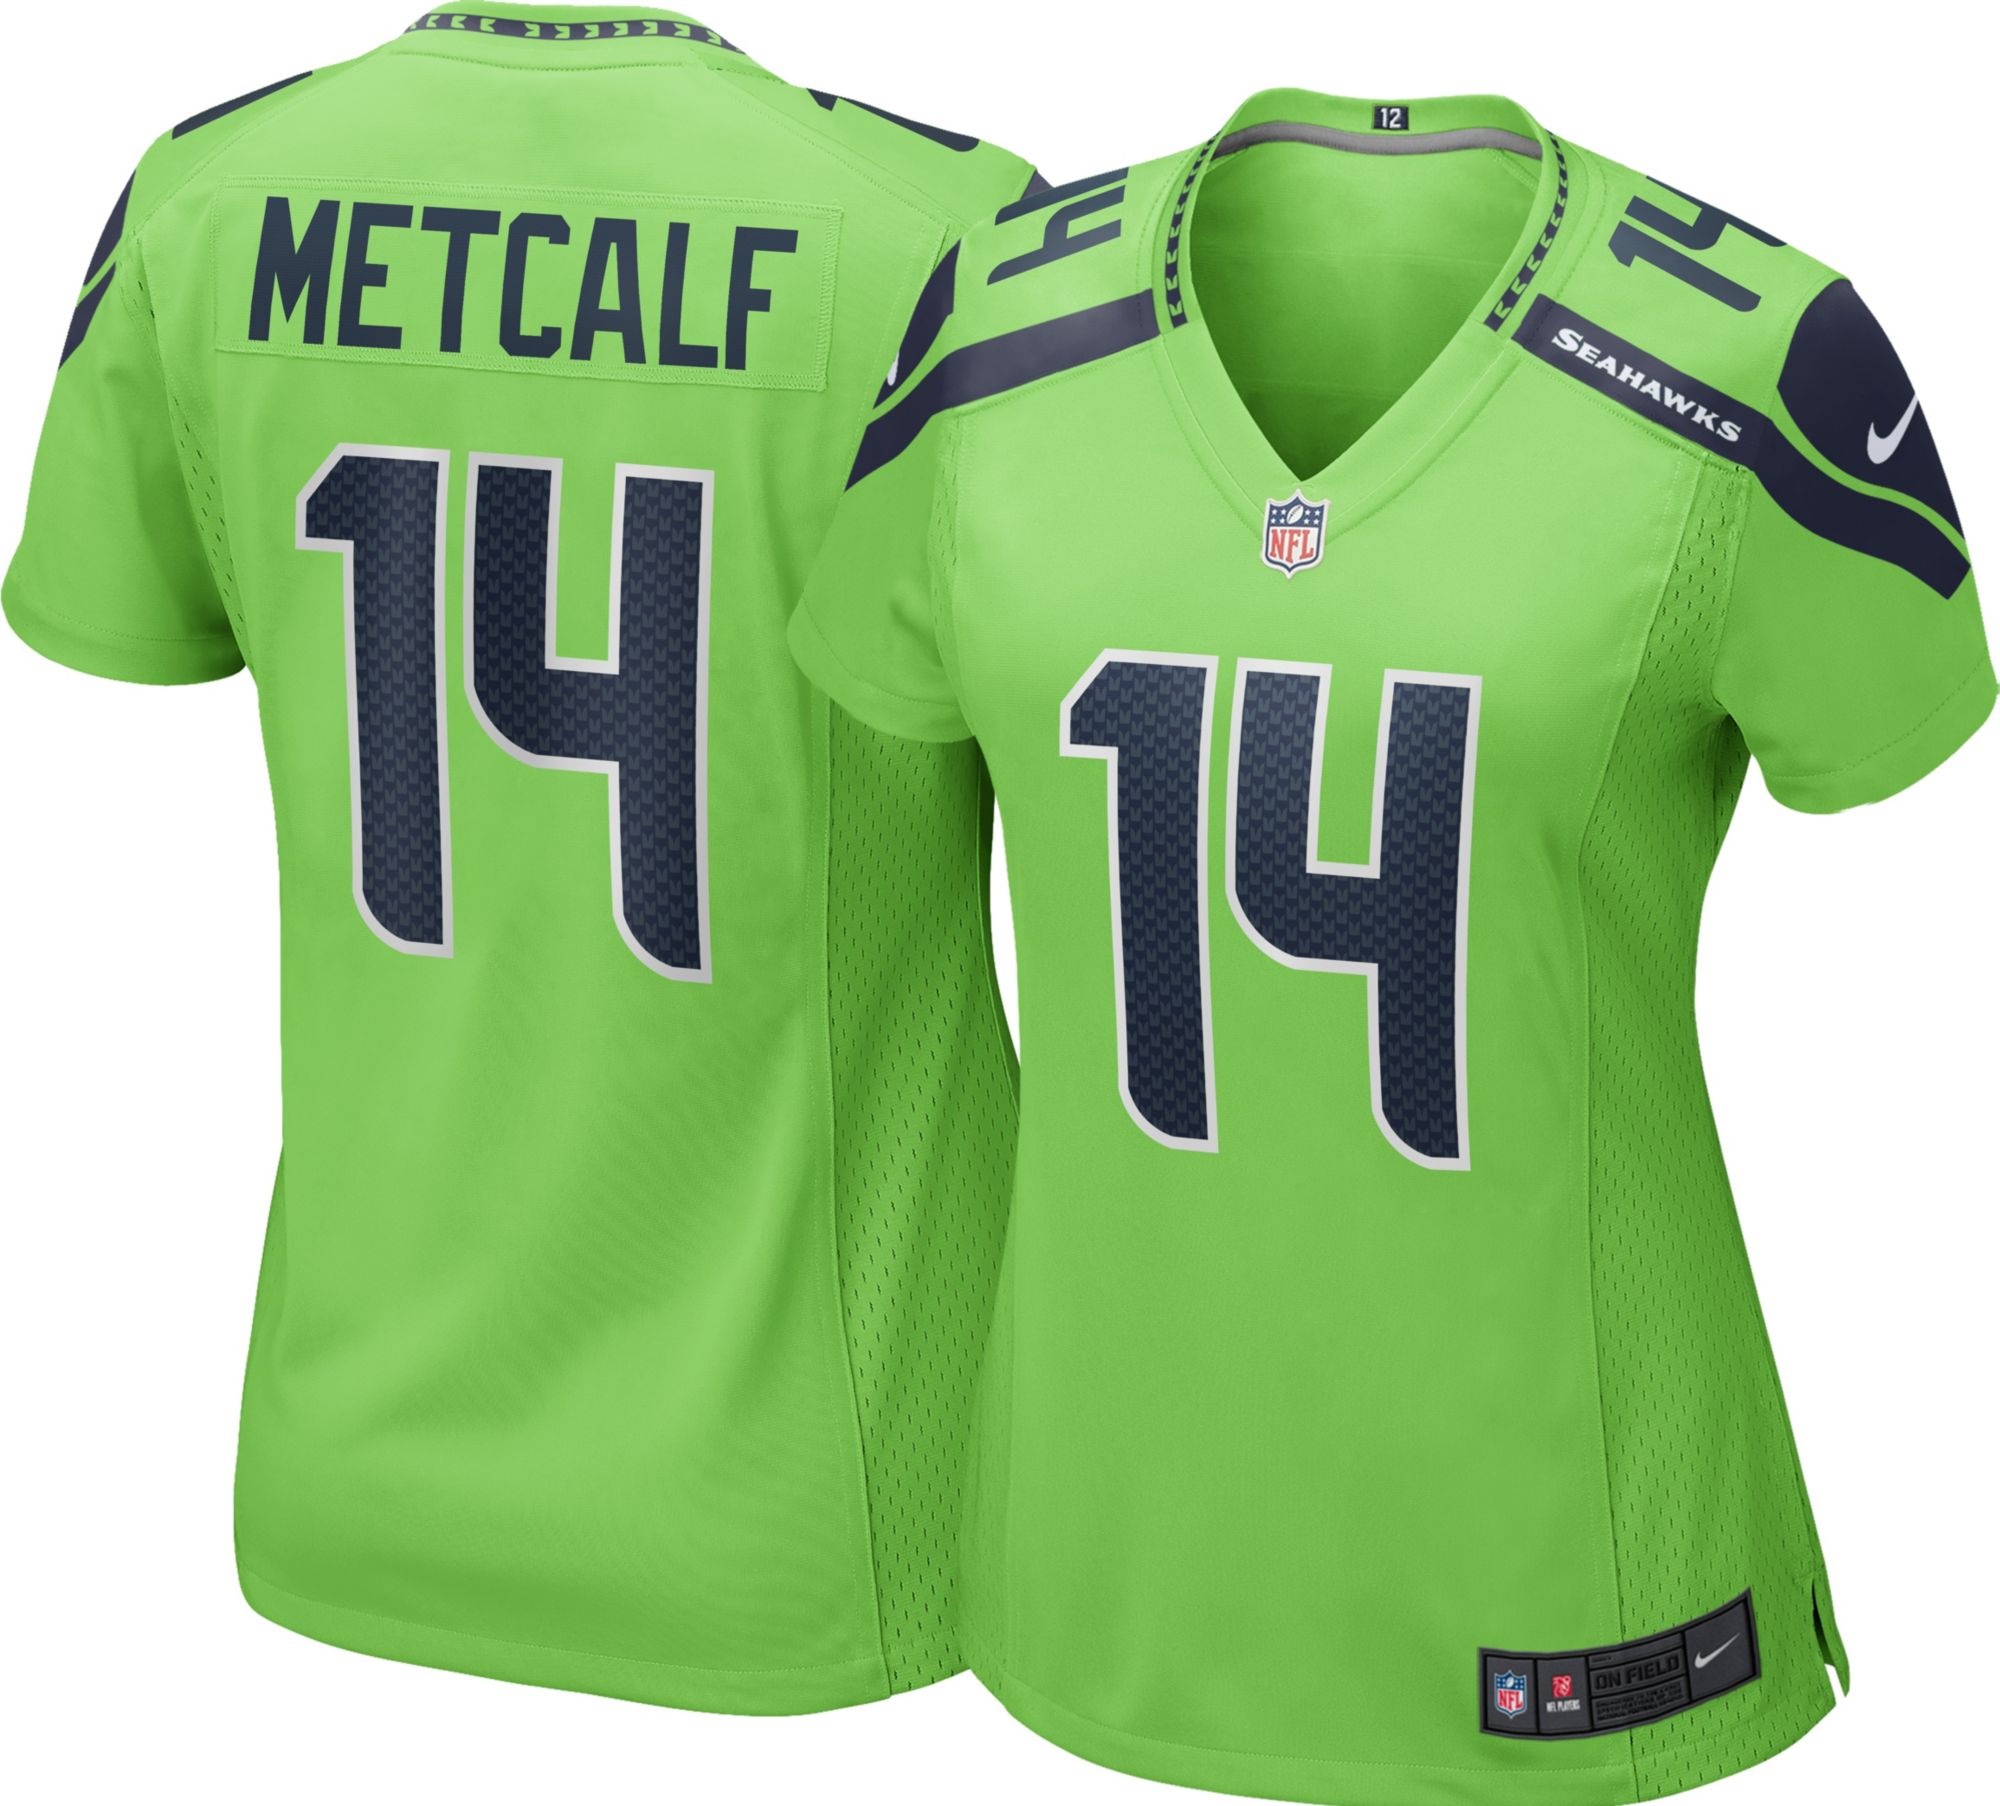 Seattle Seahawks Dk Metcalf #14 Nike Limited Jersey XLarge Navy